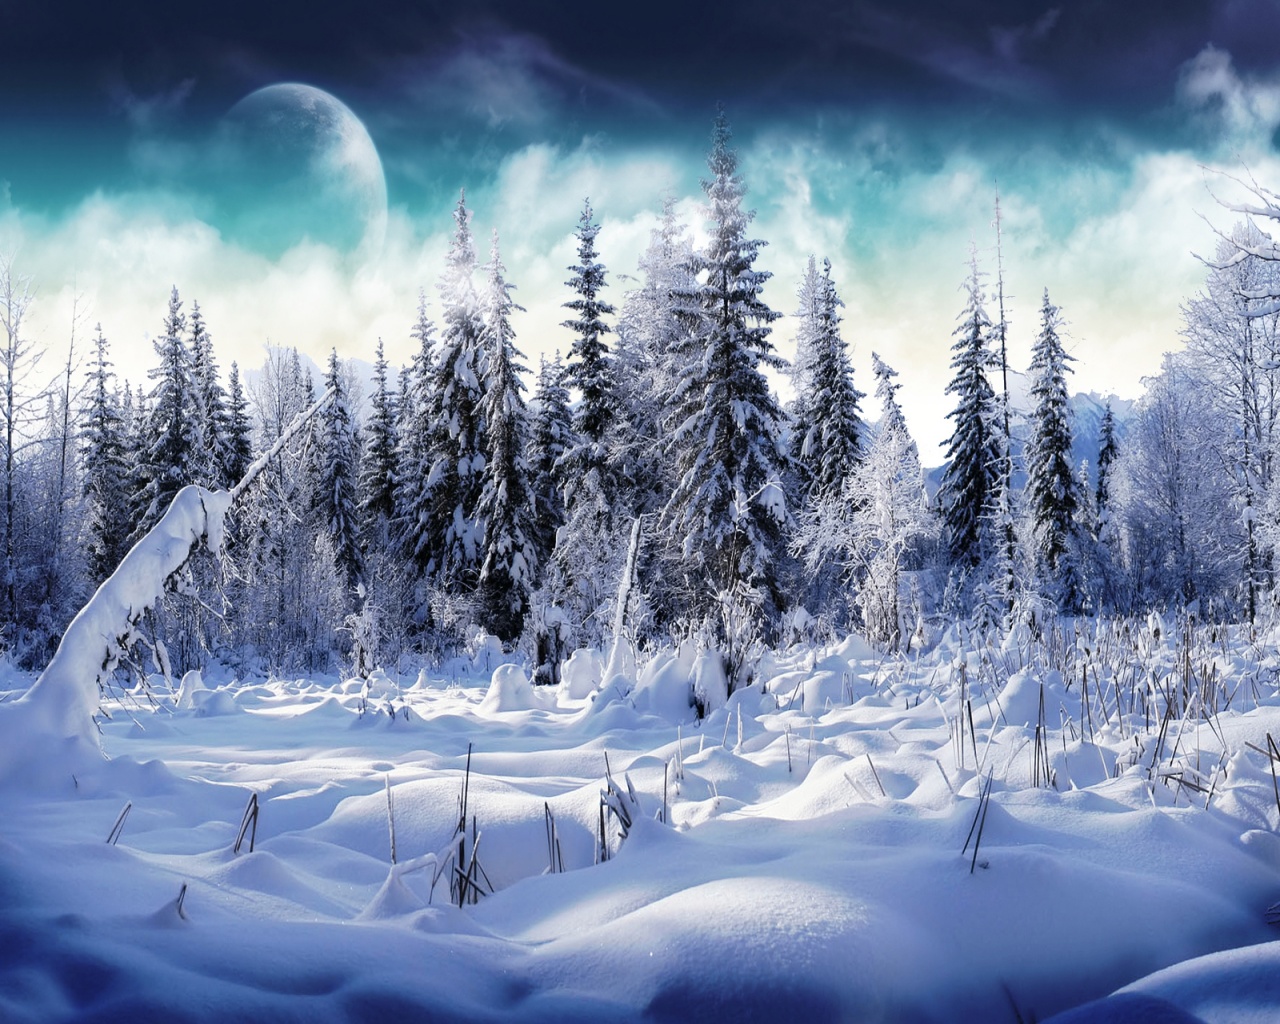  1280x1024 winter wonderland desktop pc and mac wallpaper Car Pictures